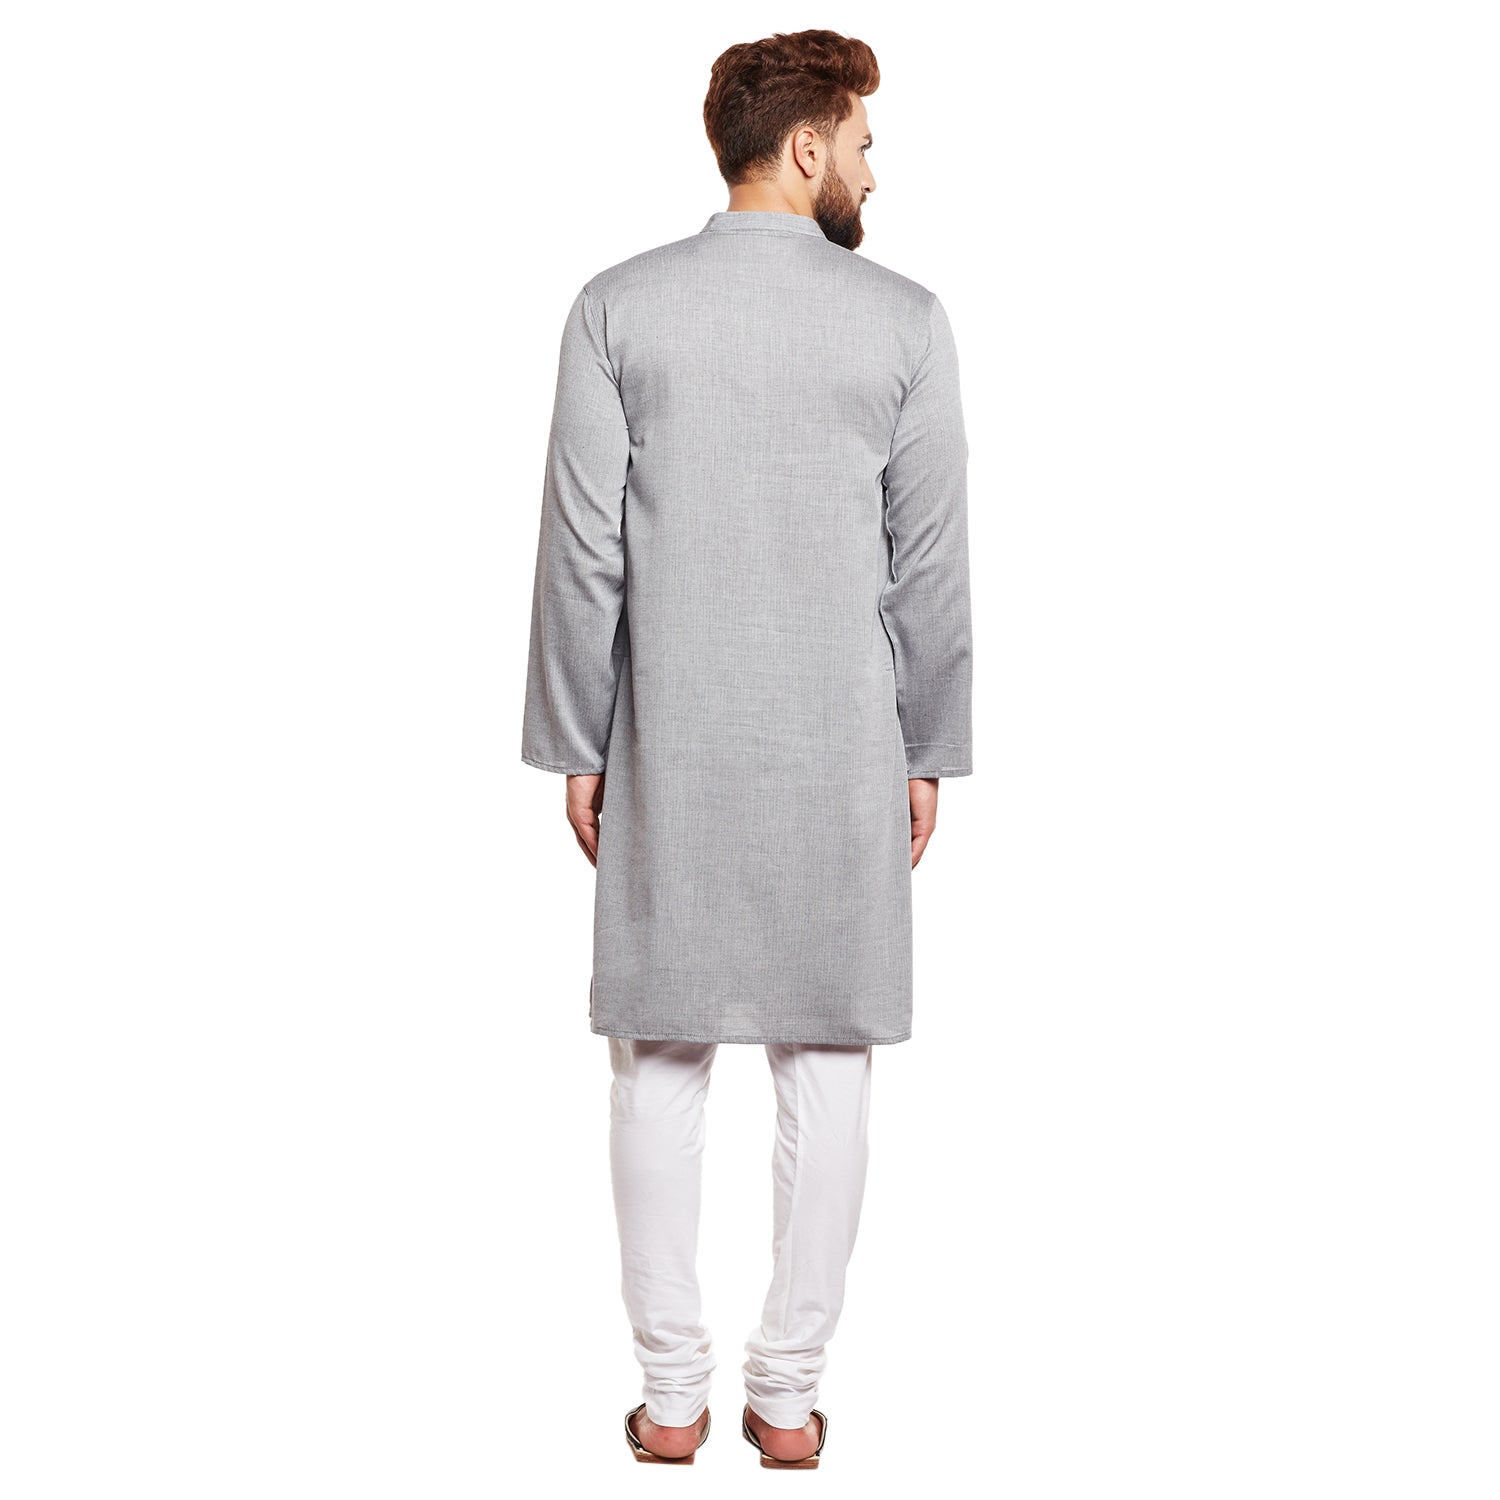 Men's Light Grey Solid Cotton Kurta  - Even Apparels